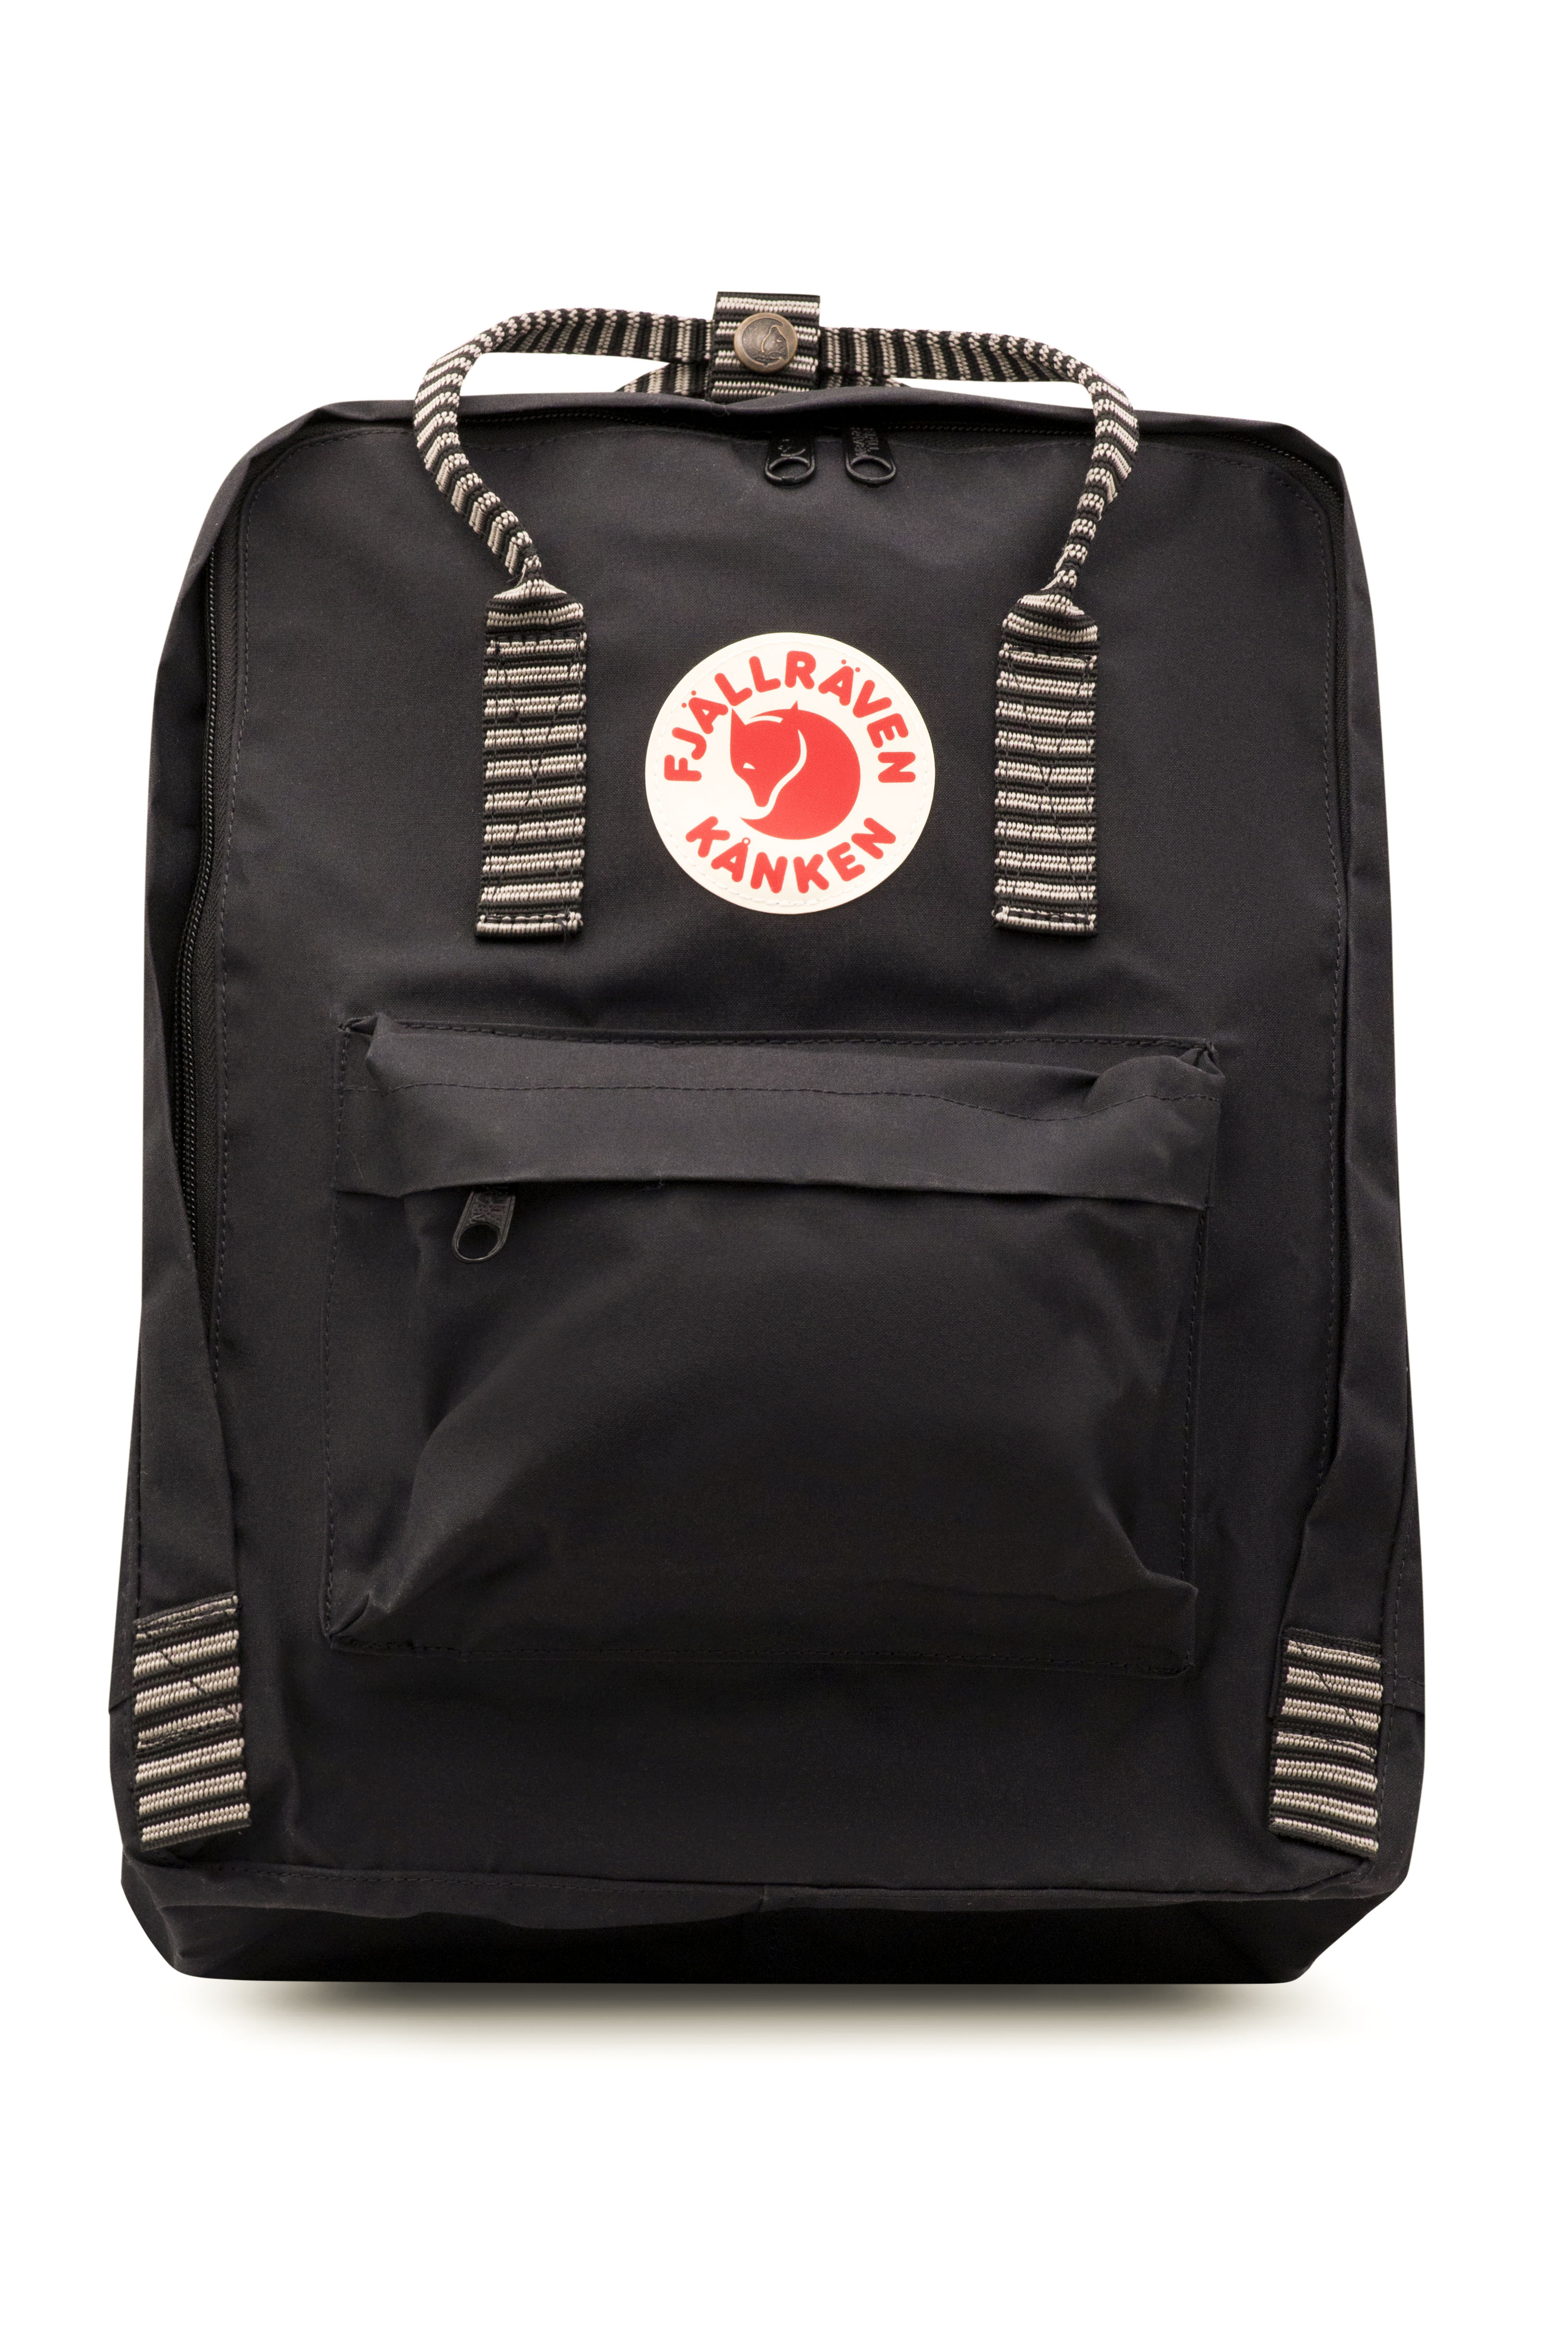 Fjallraven - Kanken Classic Backpack for Everyday - Black/Striped ...